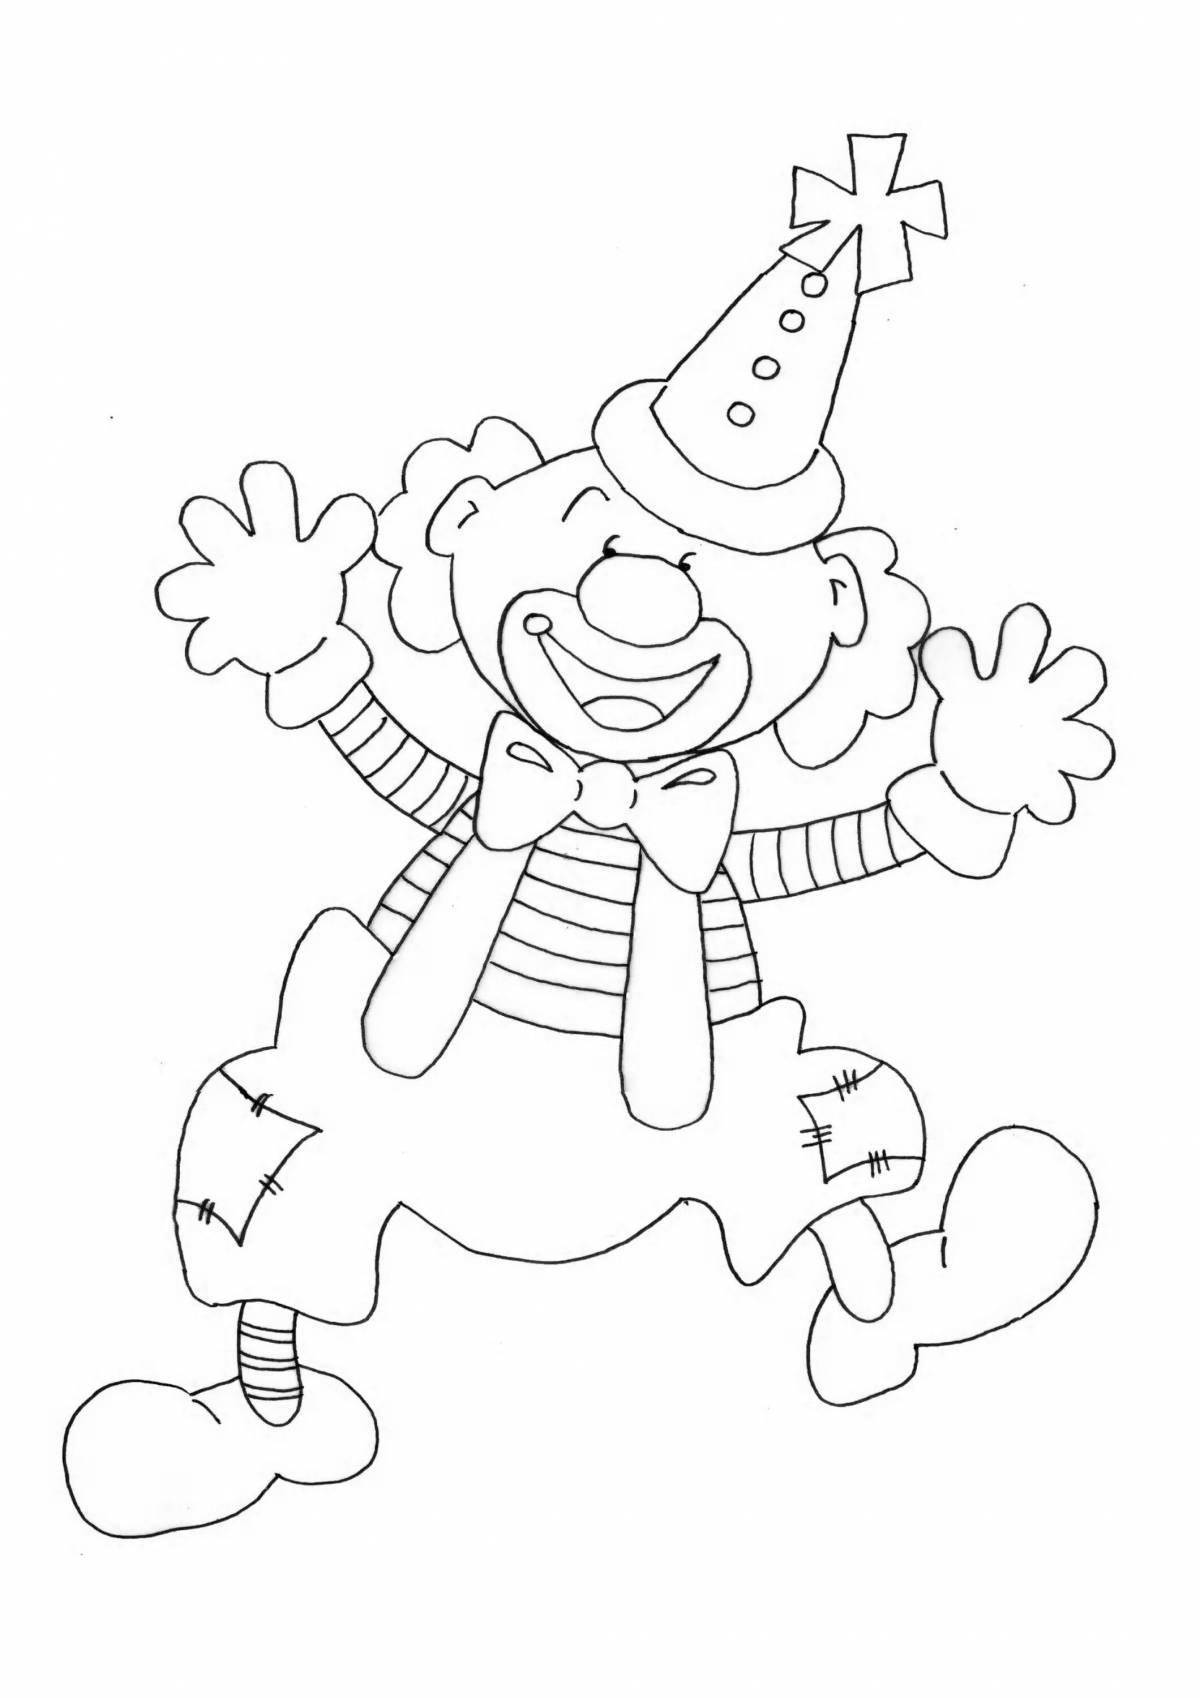 Magical clown coloring book for preschoolers